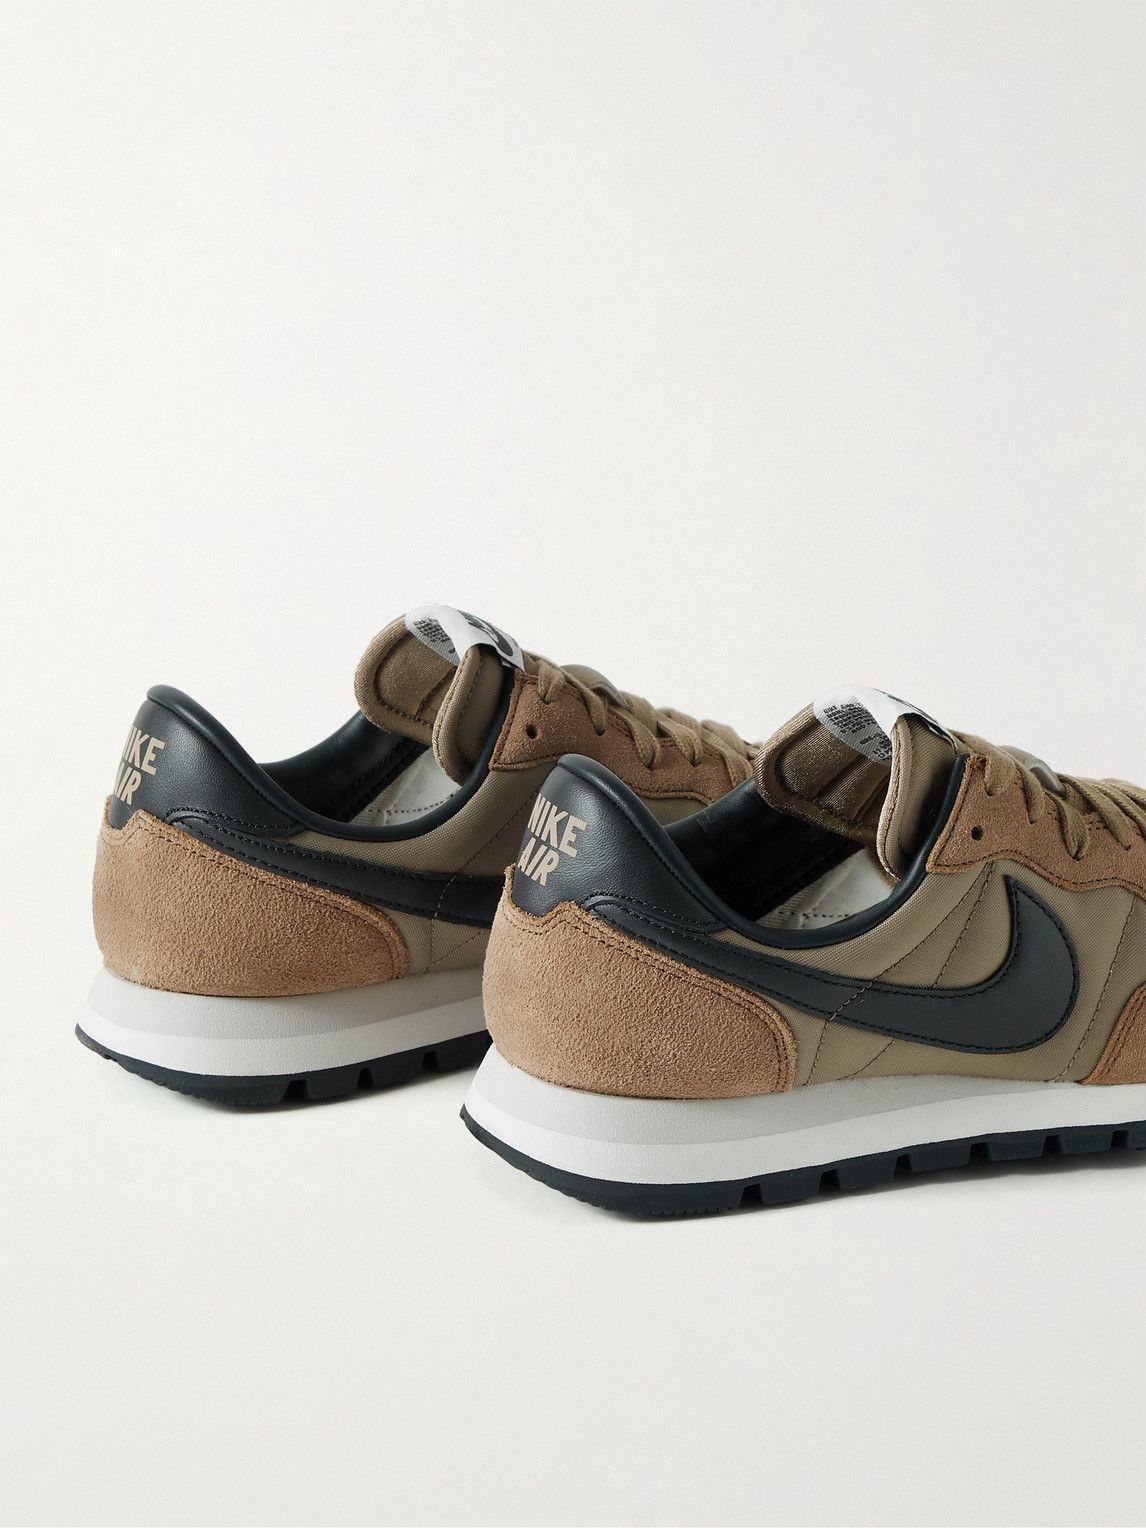 Nike - Pegasus 83 Suede and Mesh Sneakers - Brown